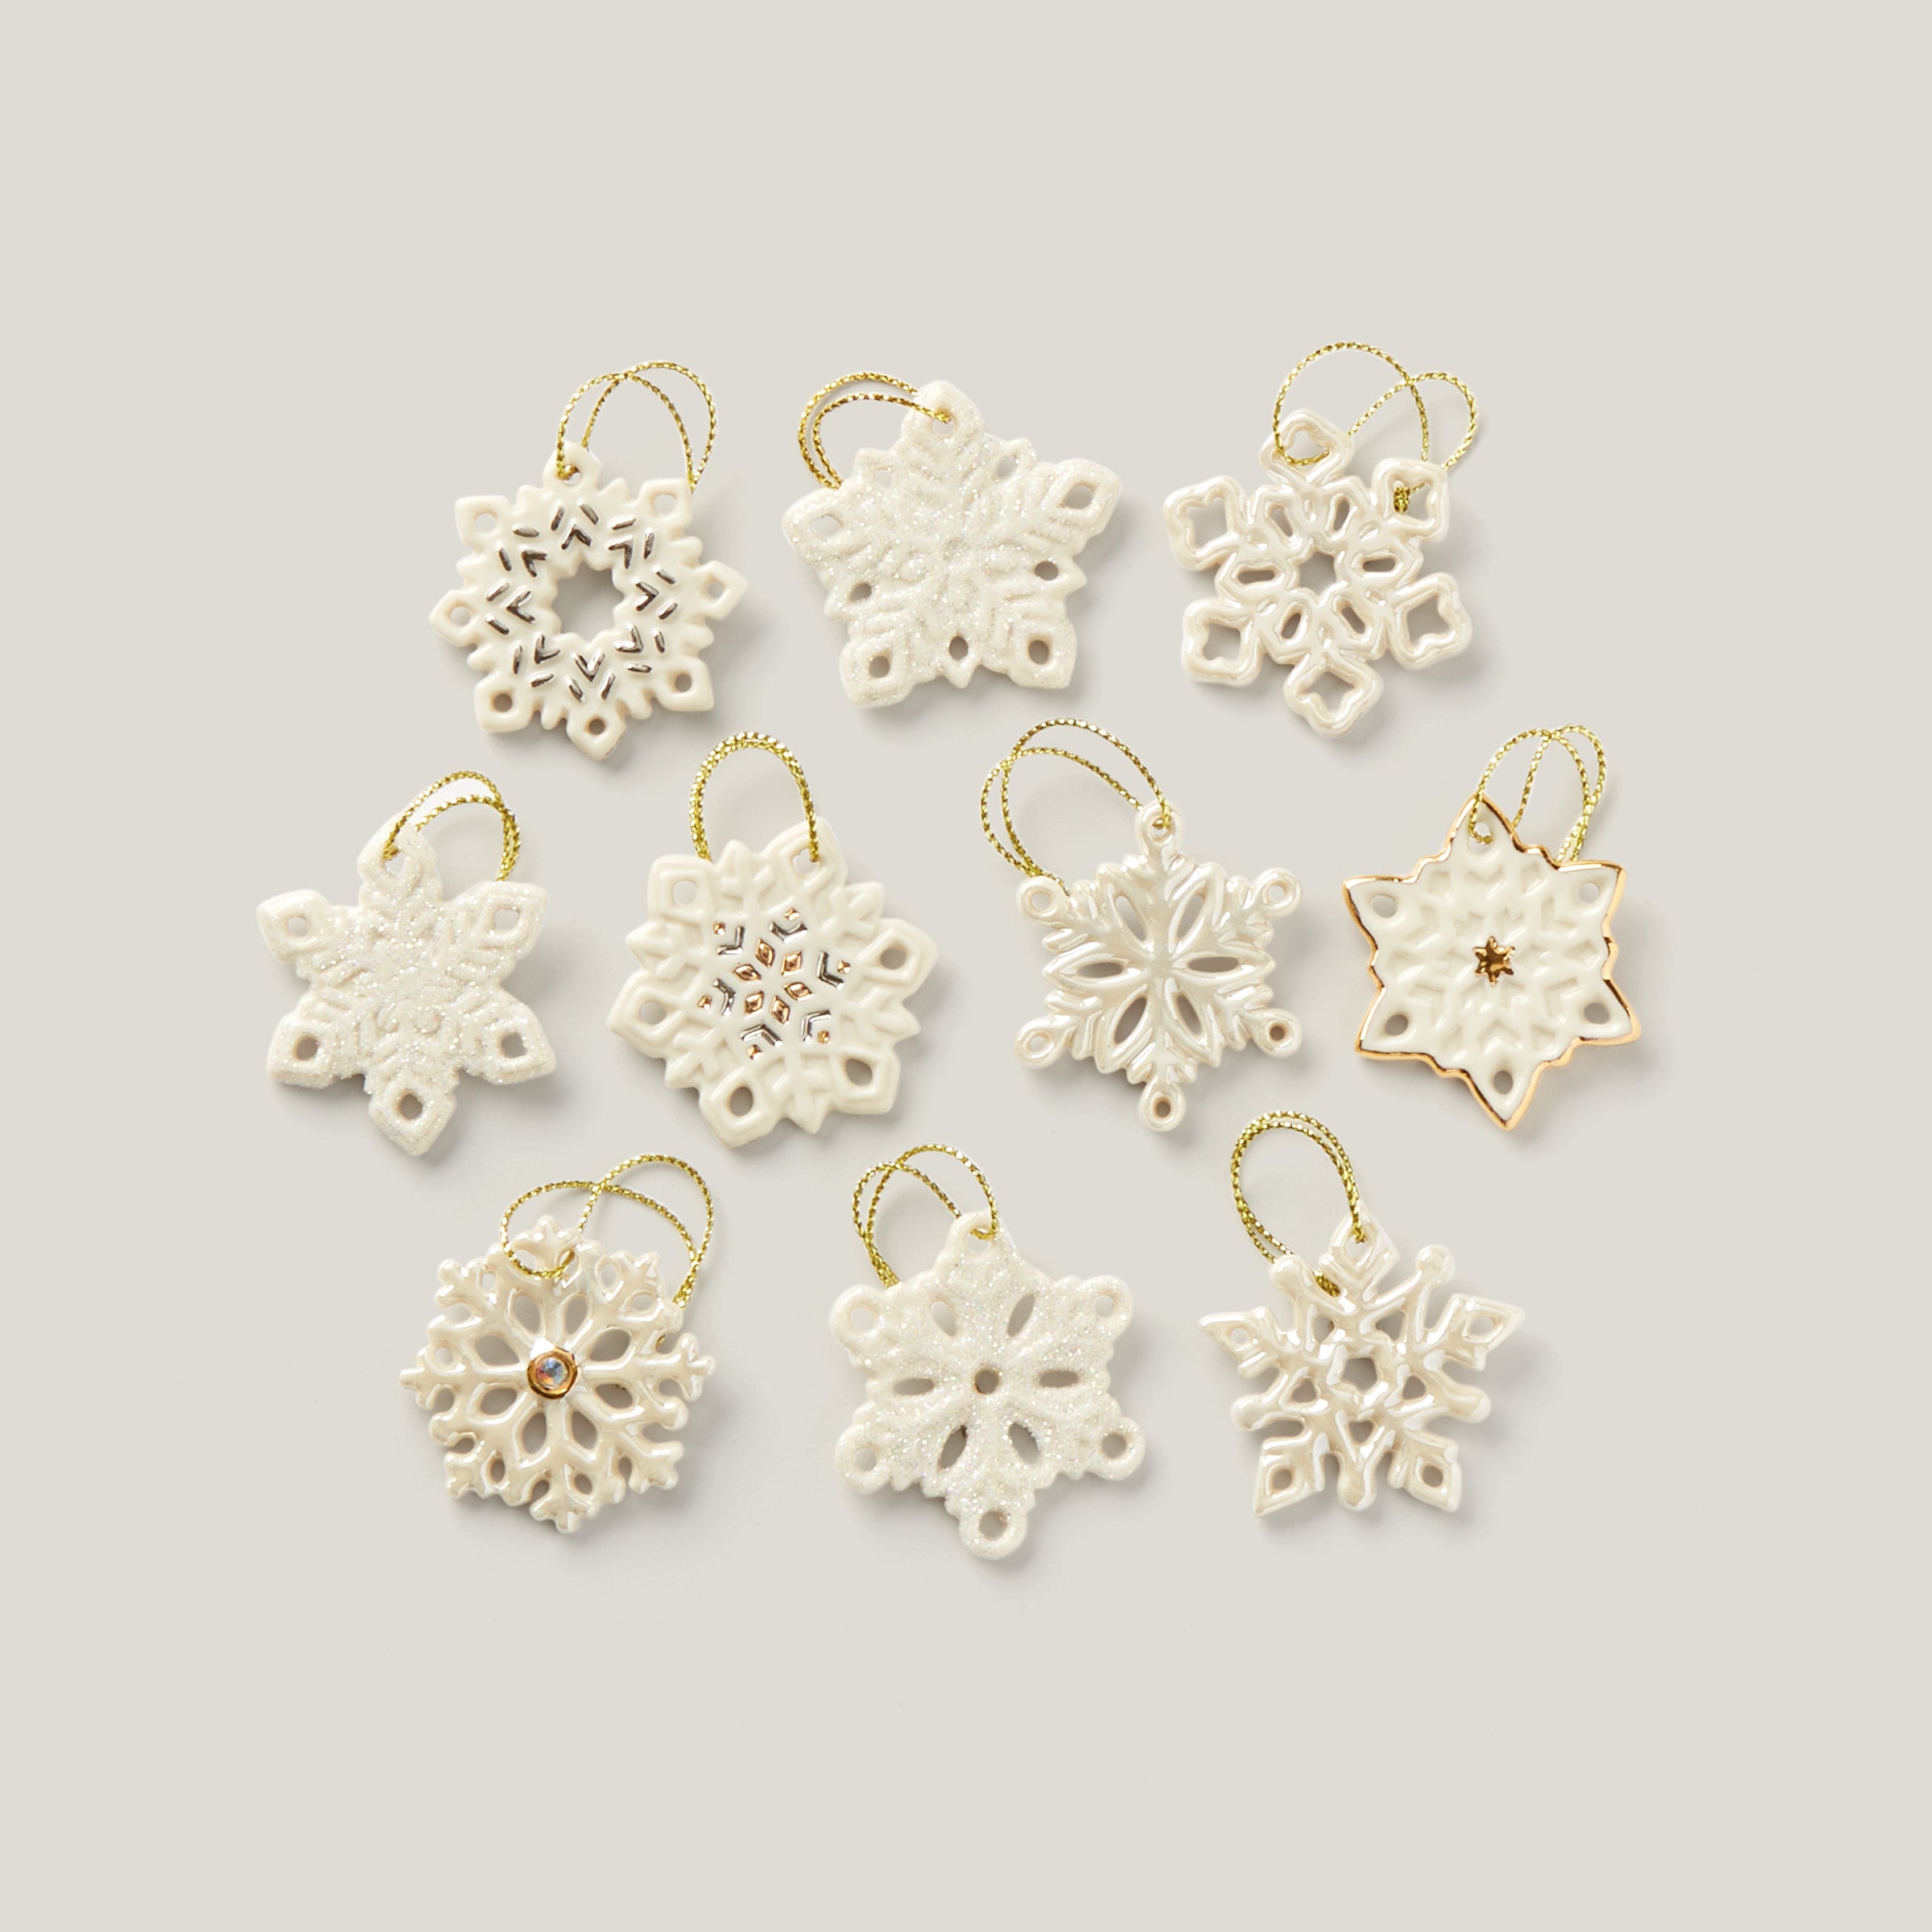 Mini Snowflake Ornament Set 1